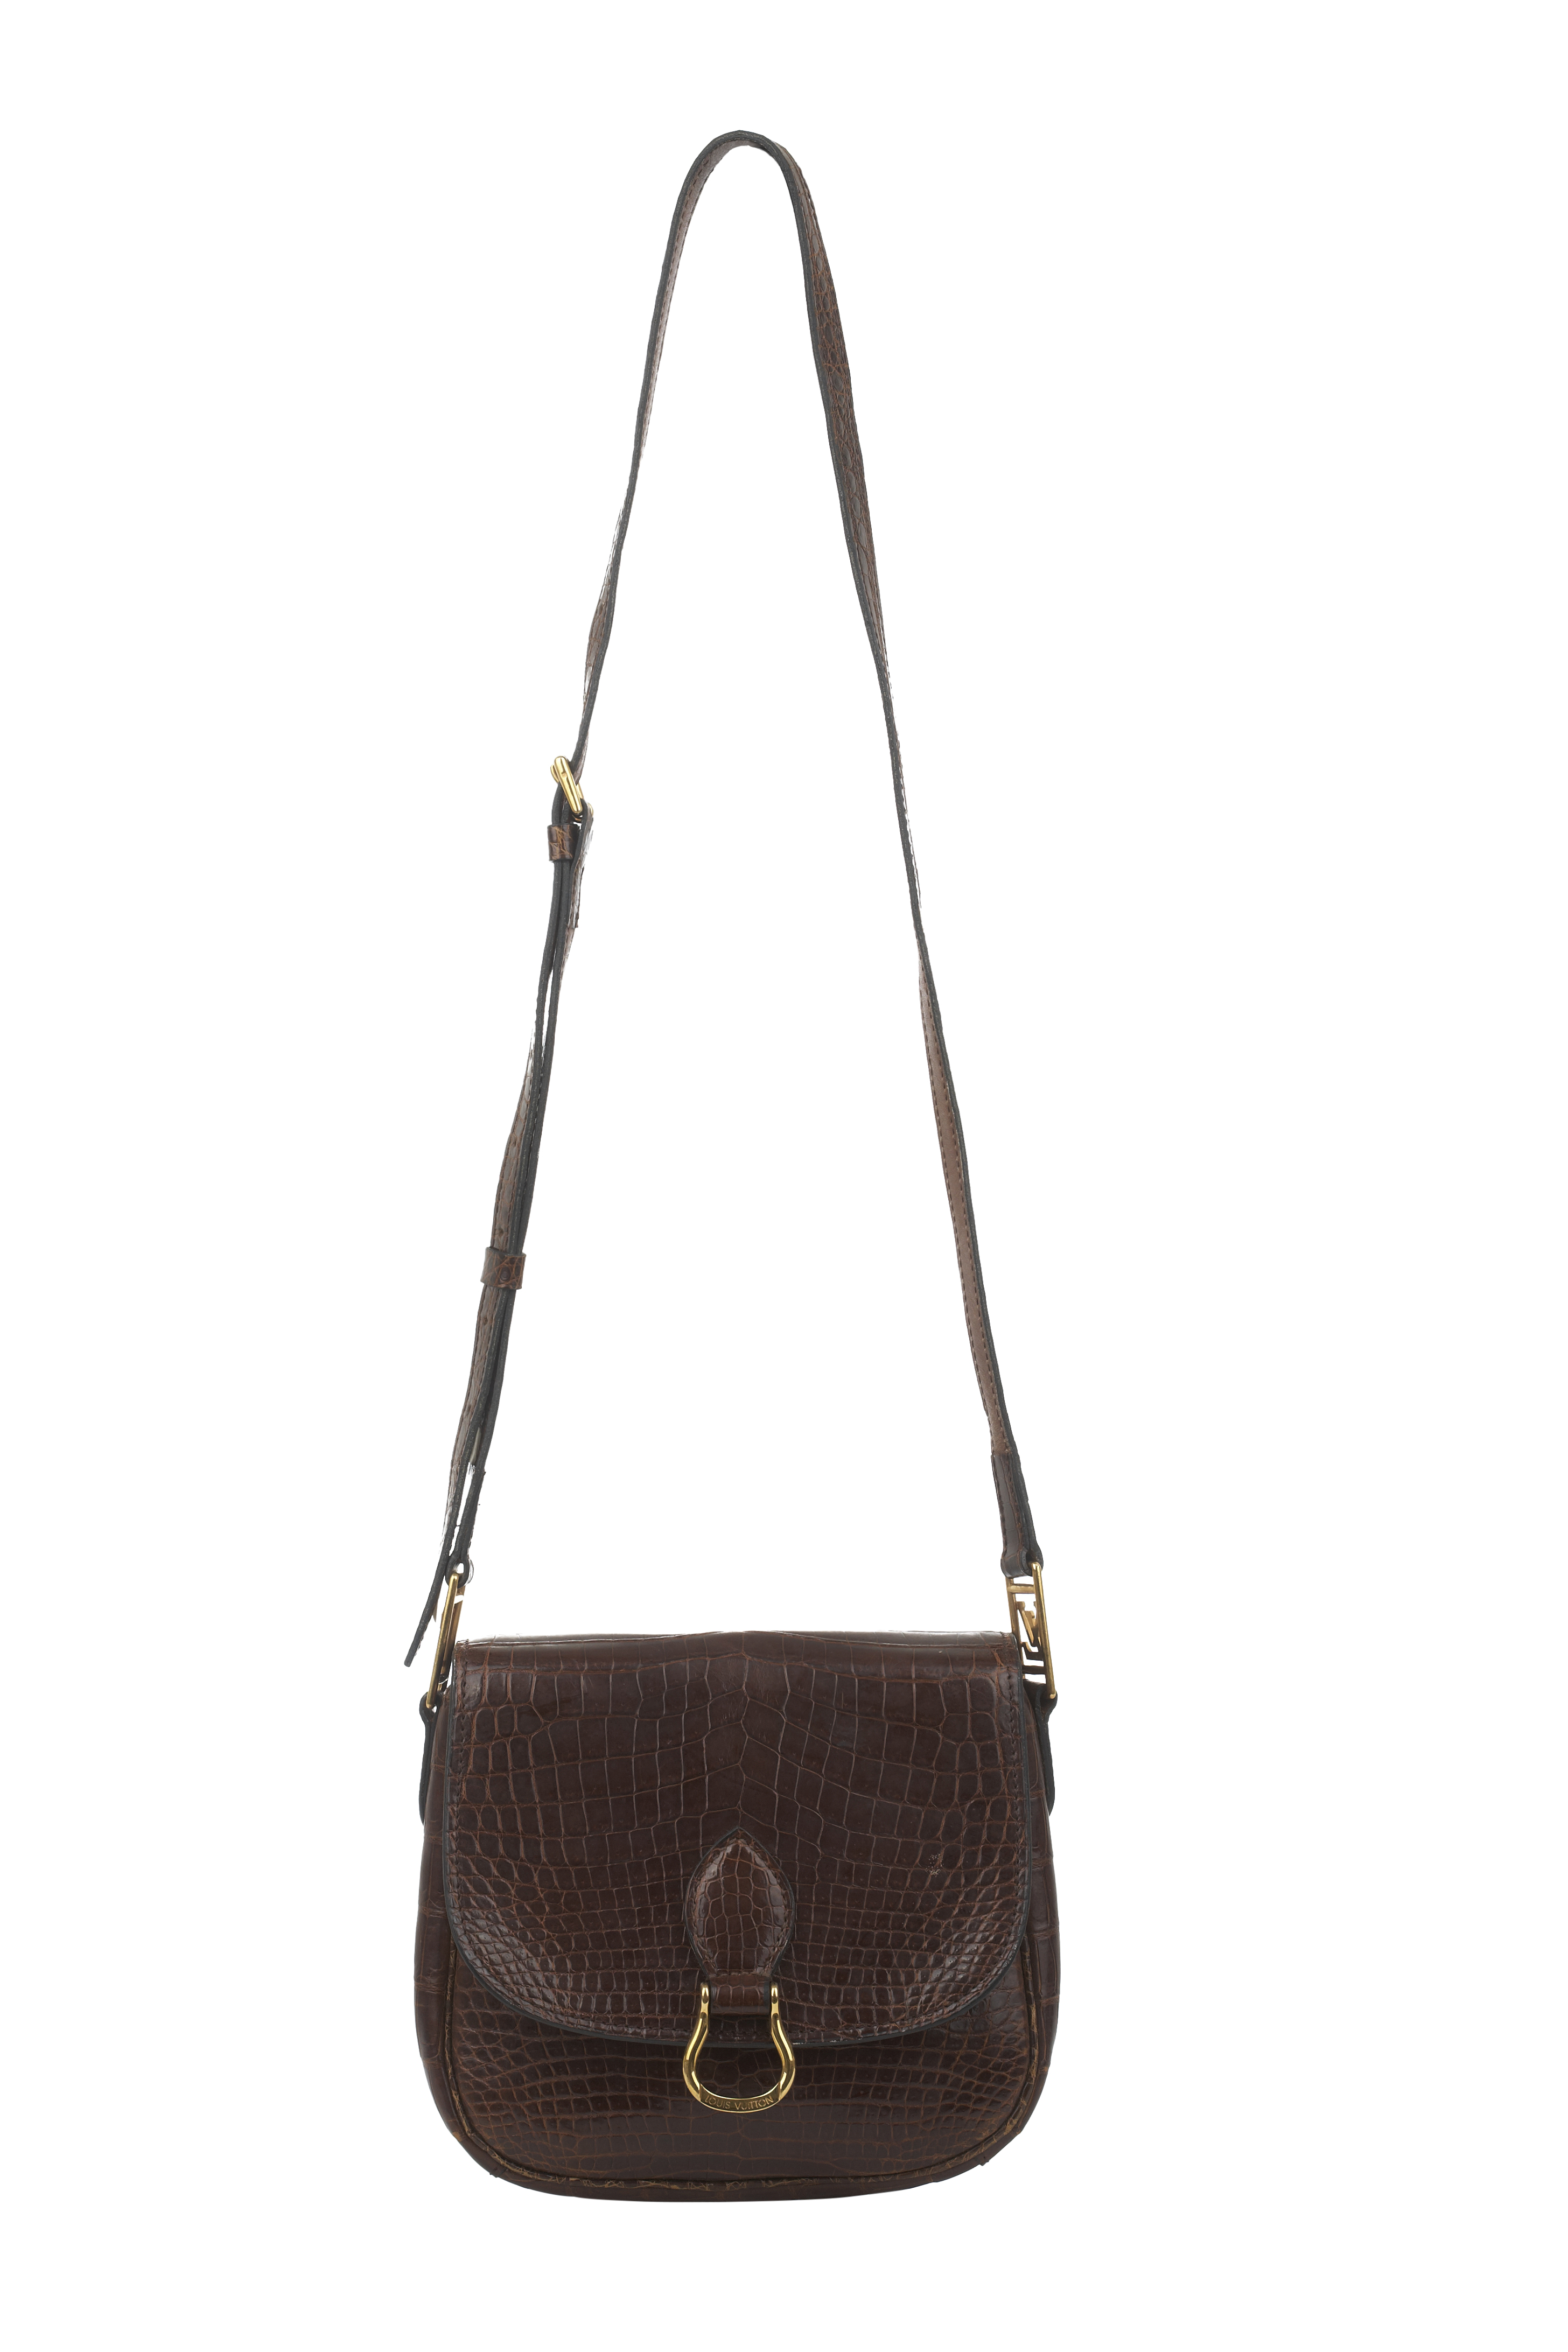 Louis Vuitton brown crocodile print leather bag | Curate8